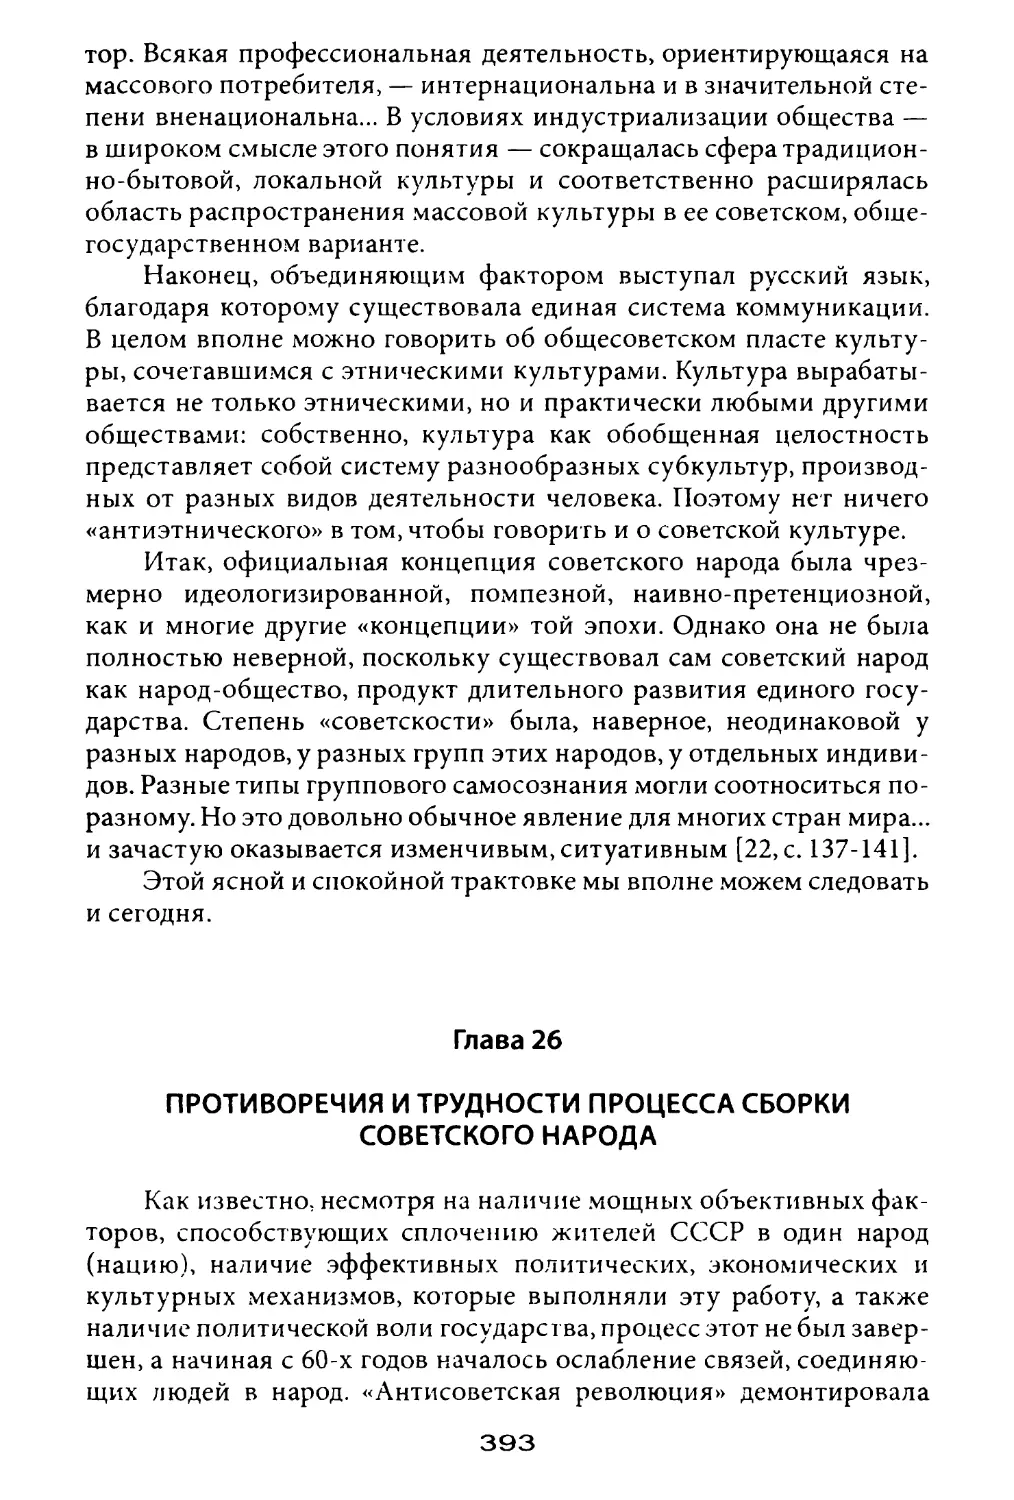 Глава 26. Противоречия и трудности процесса сборки советского народа